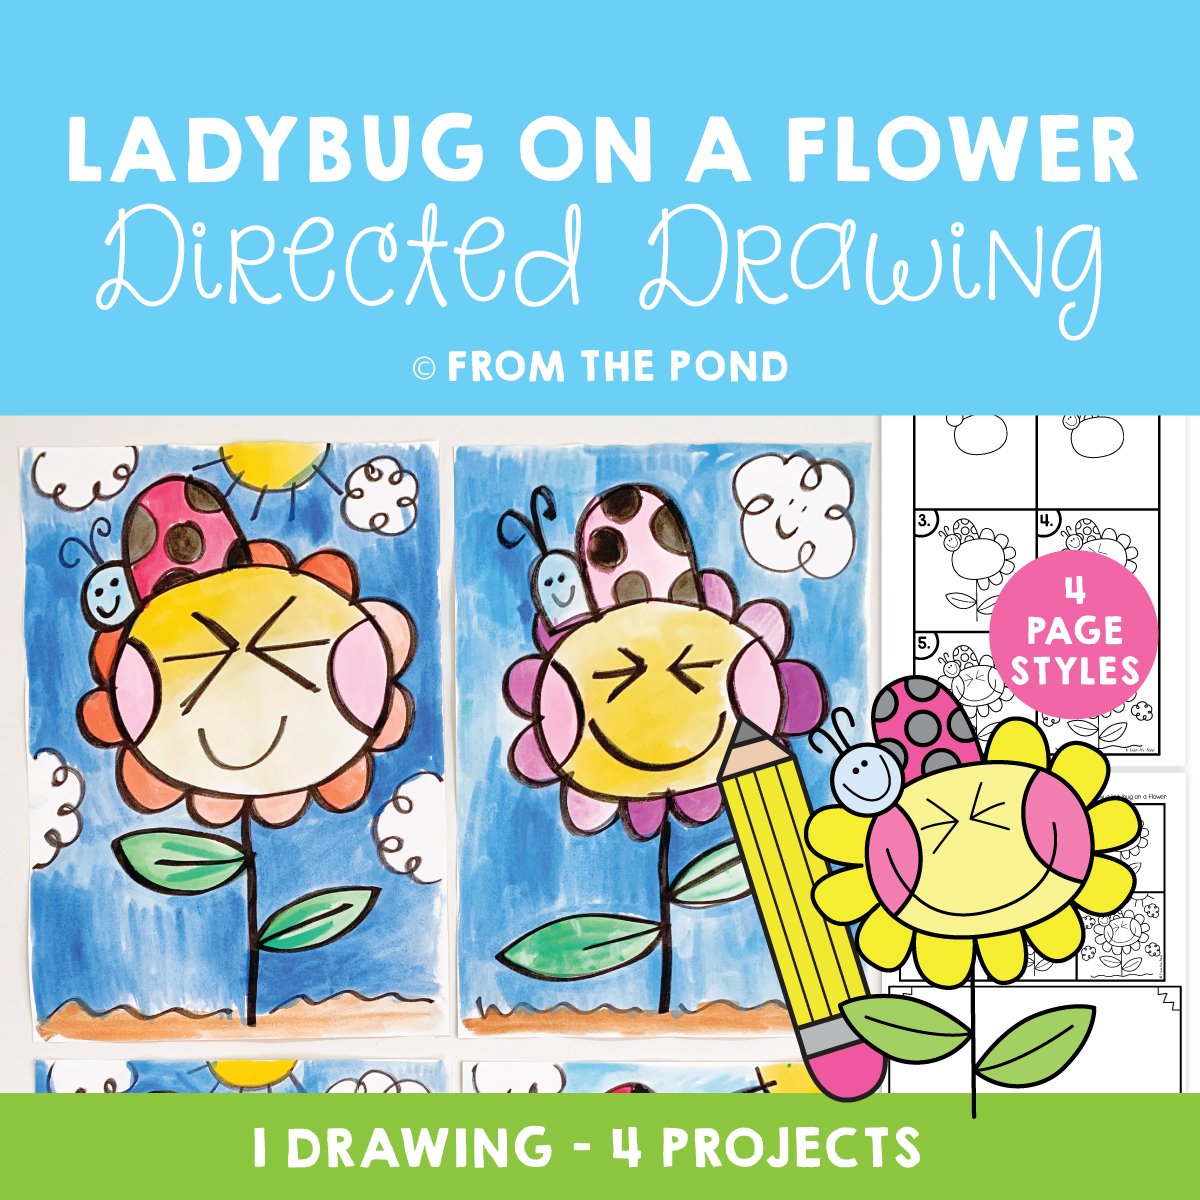 Ladybug on a Flower